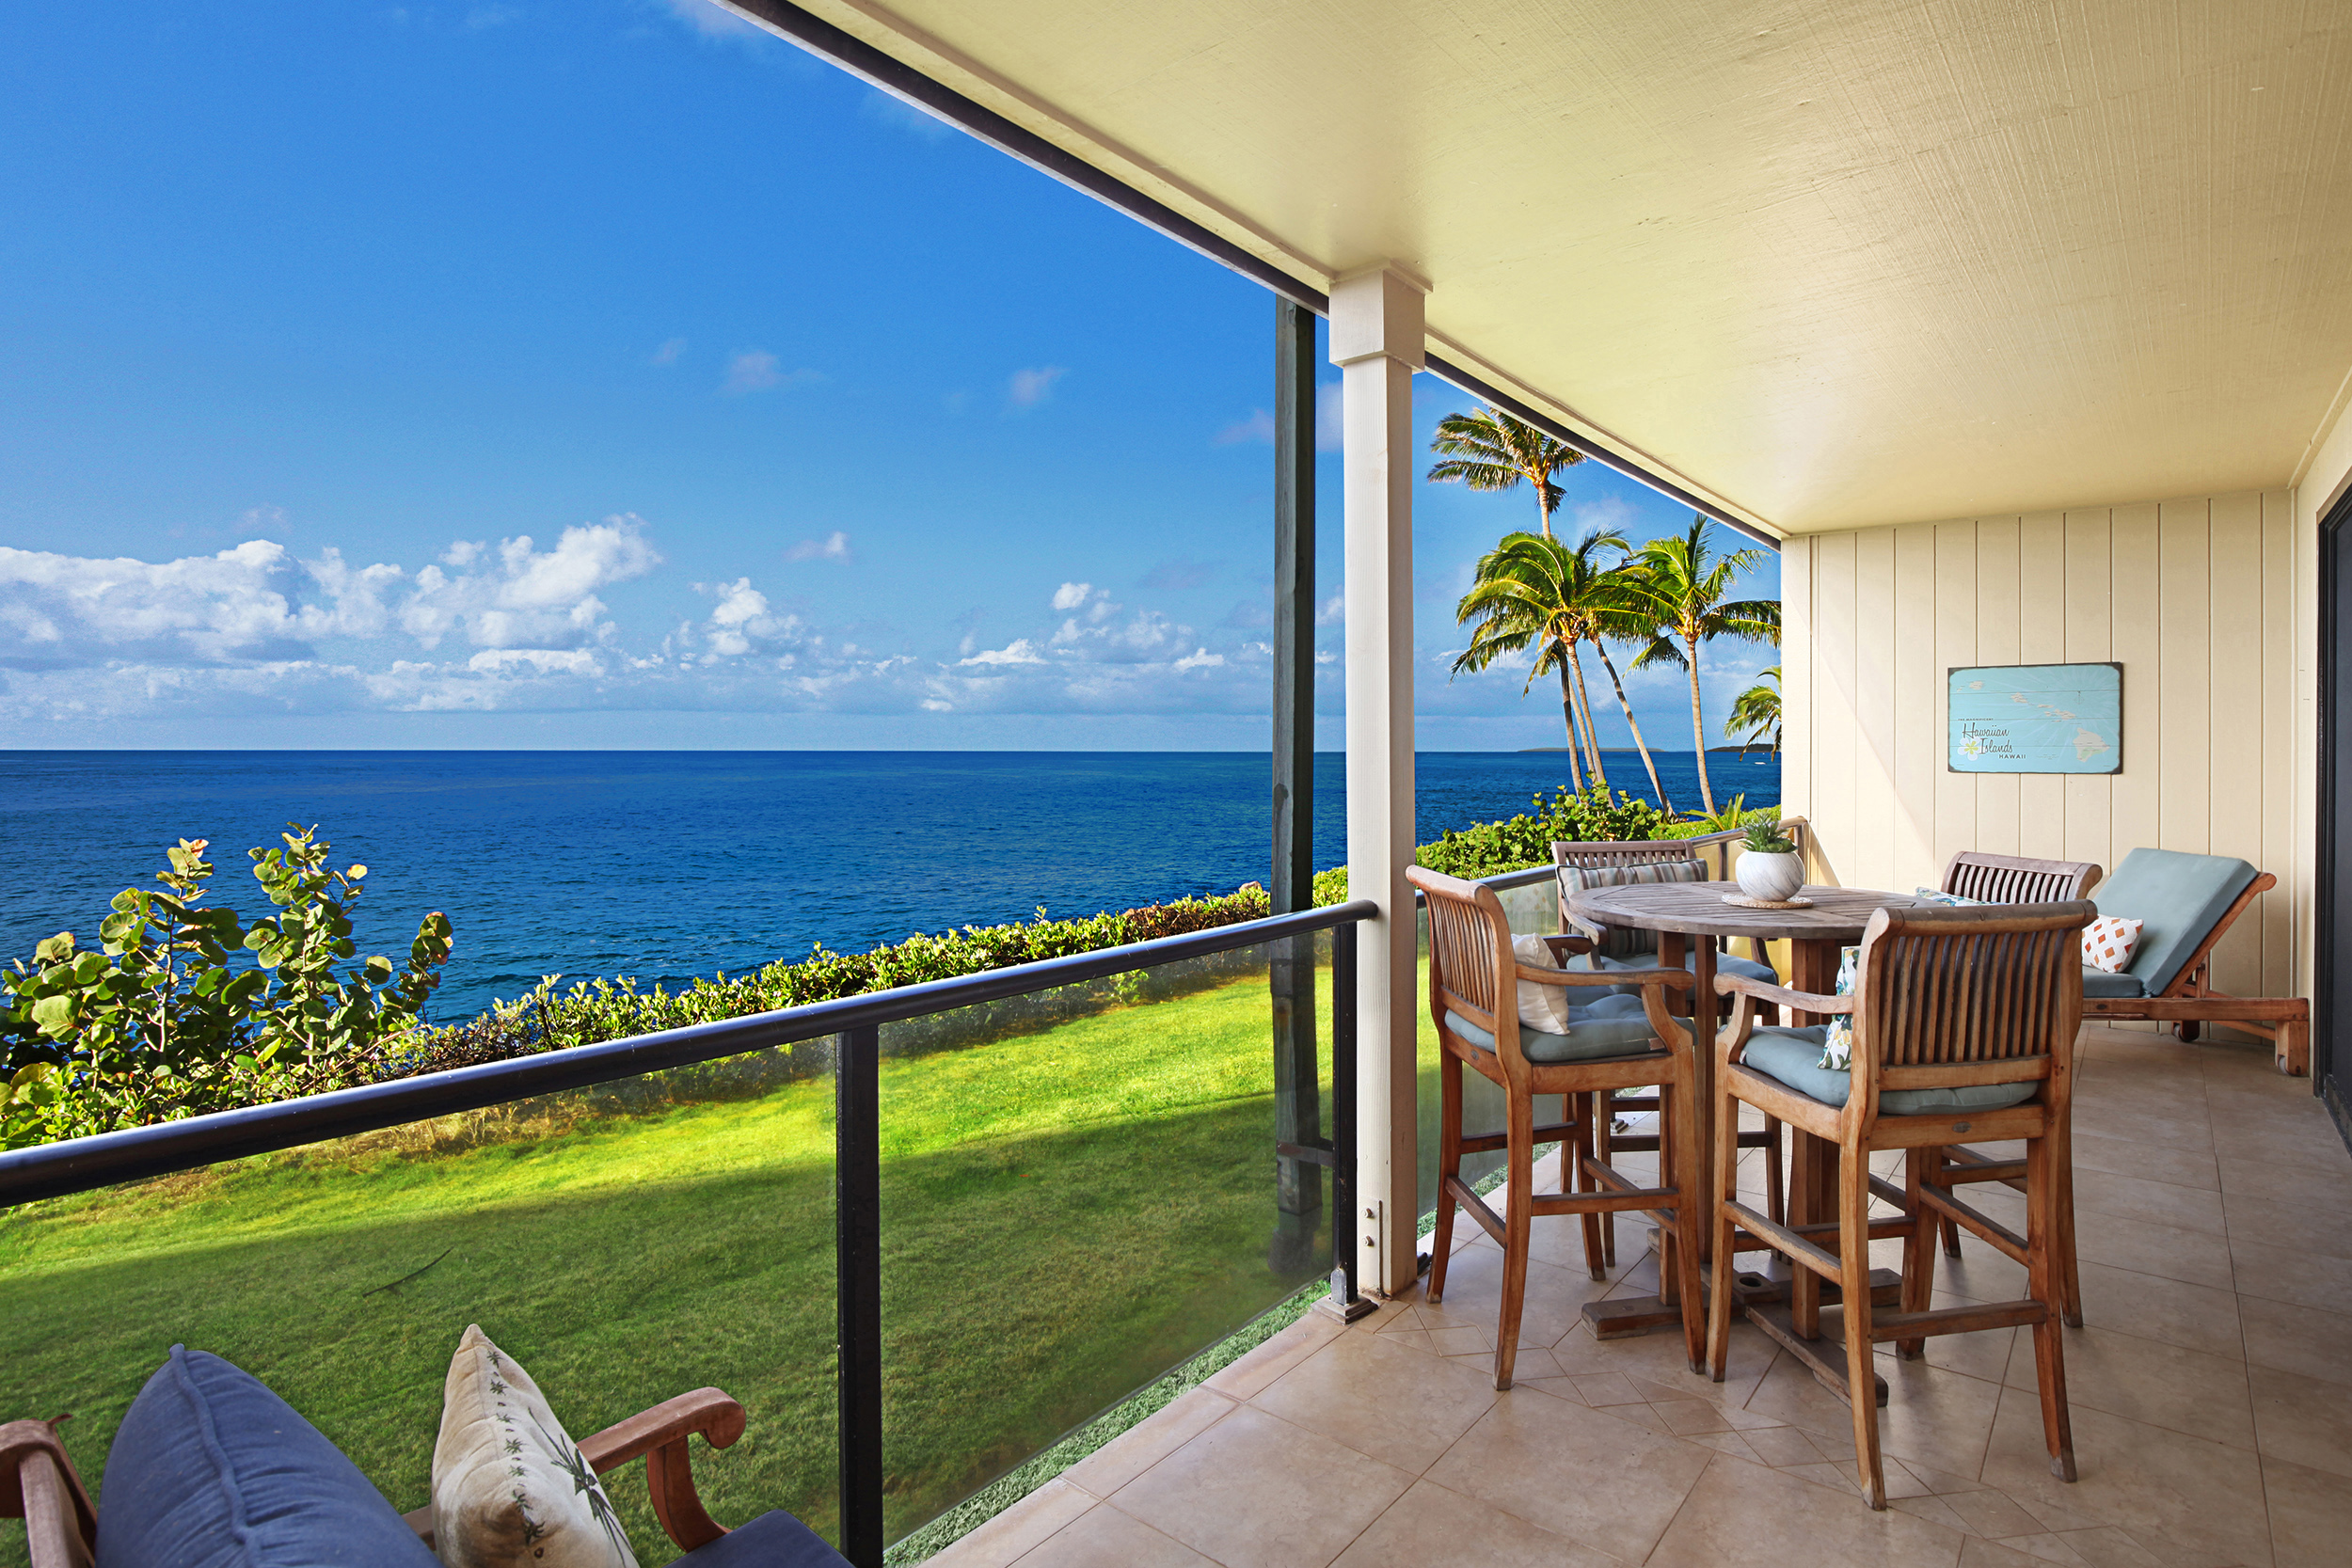 Kauai vacation rentals